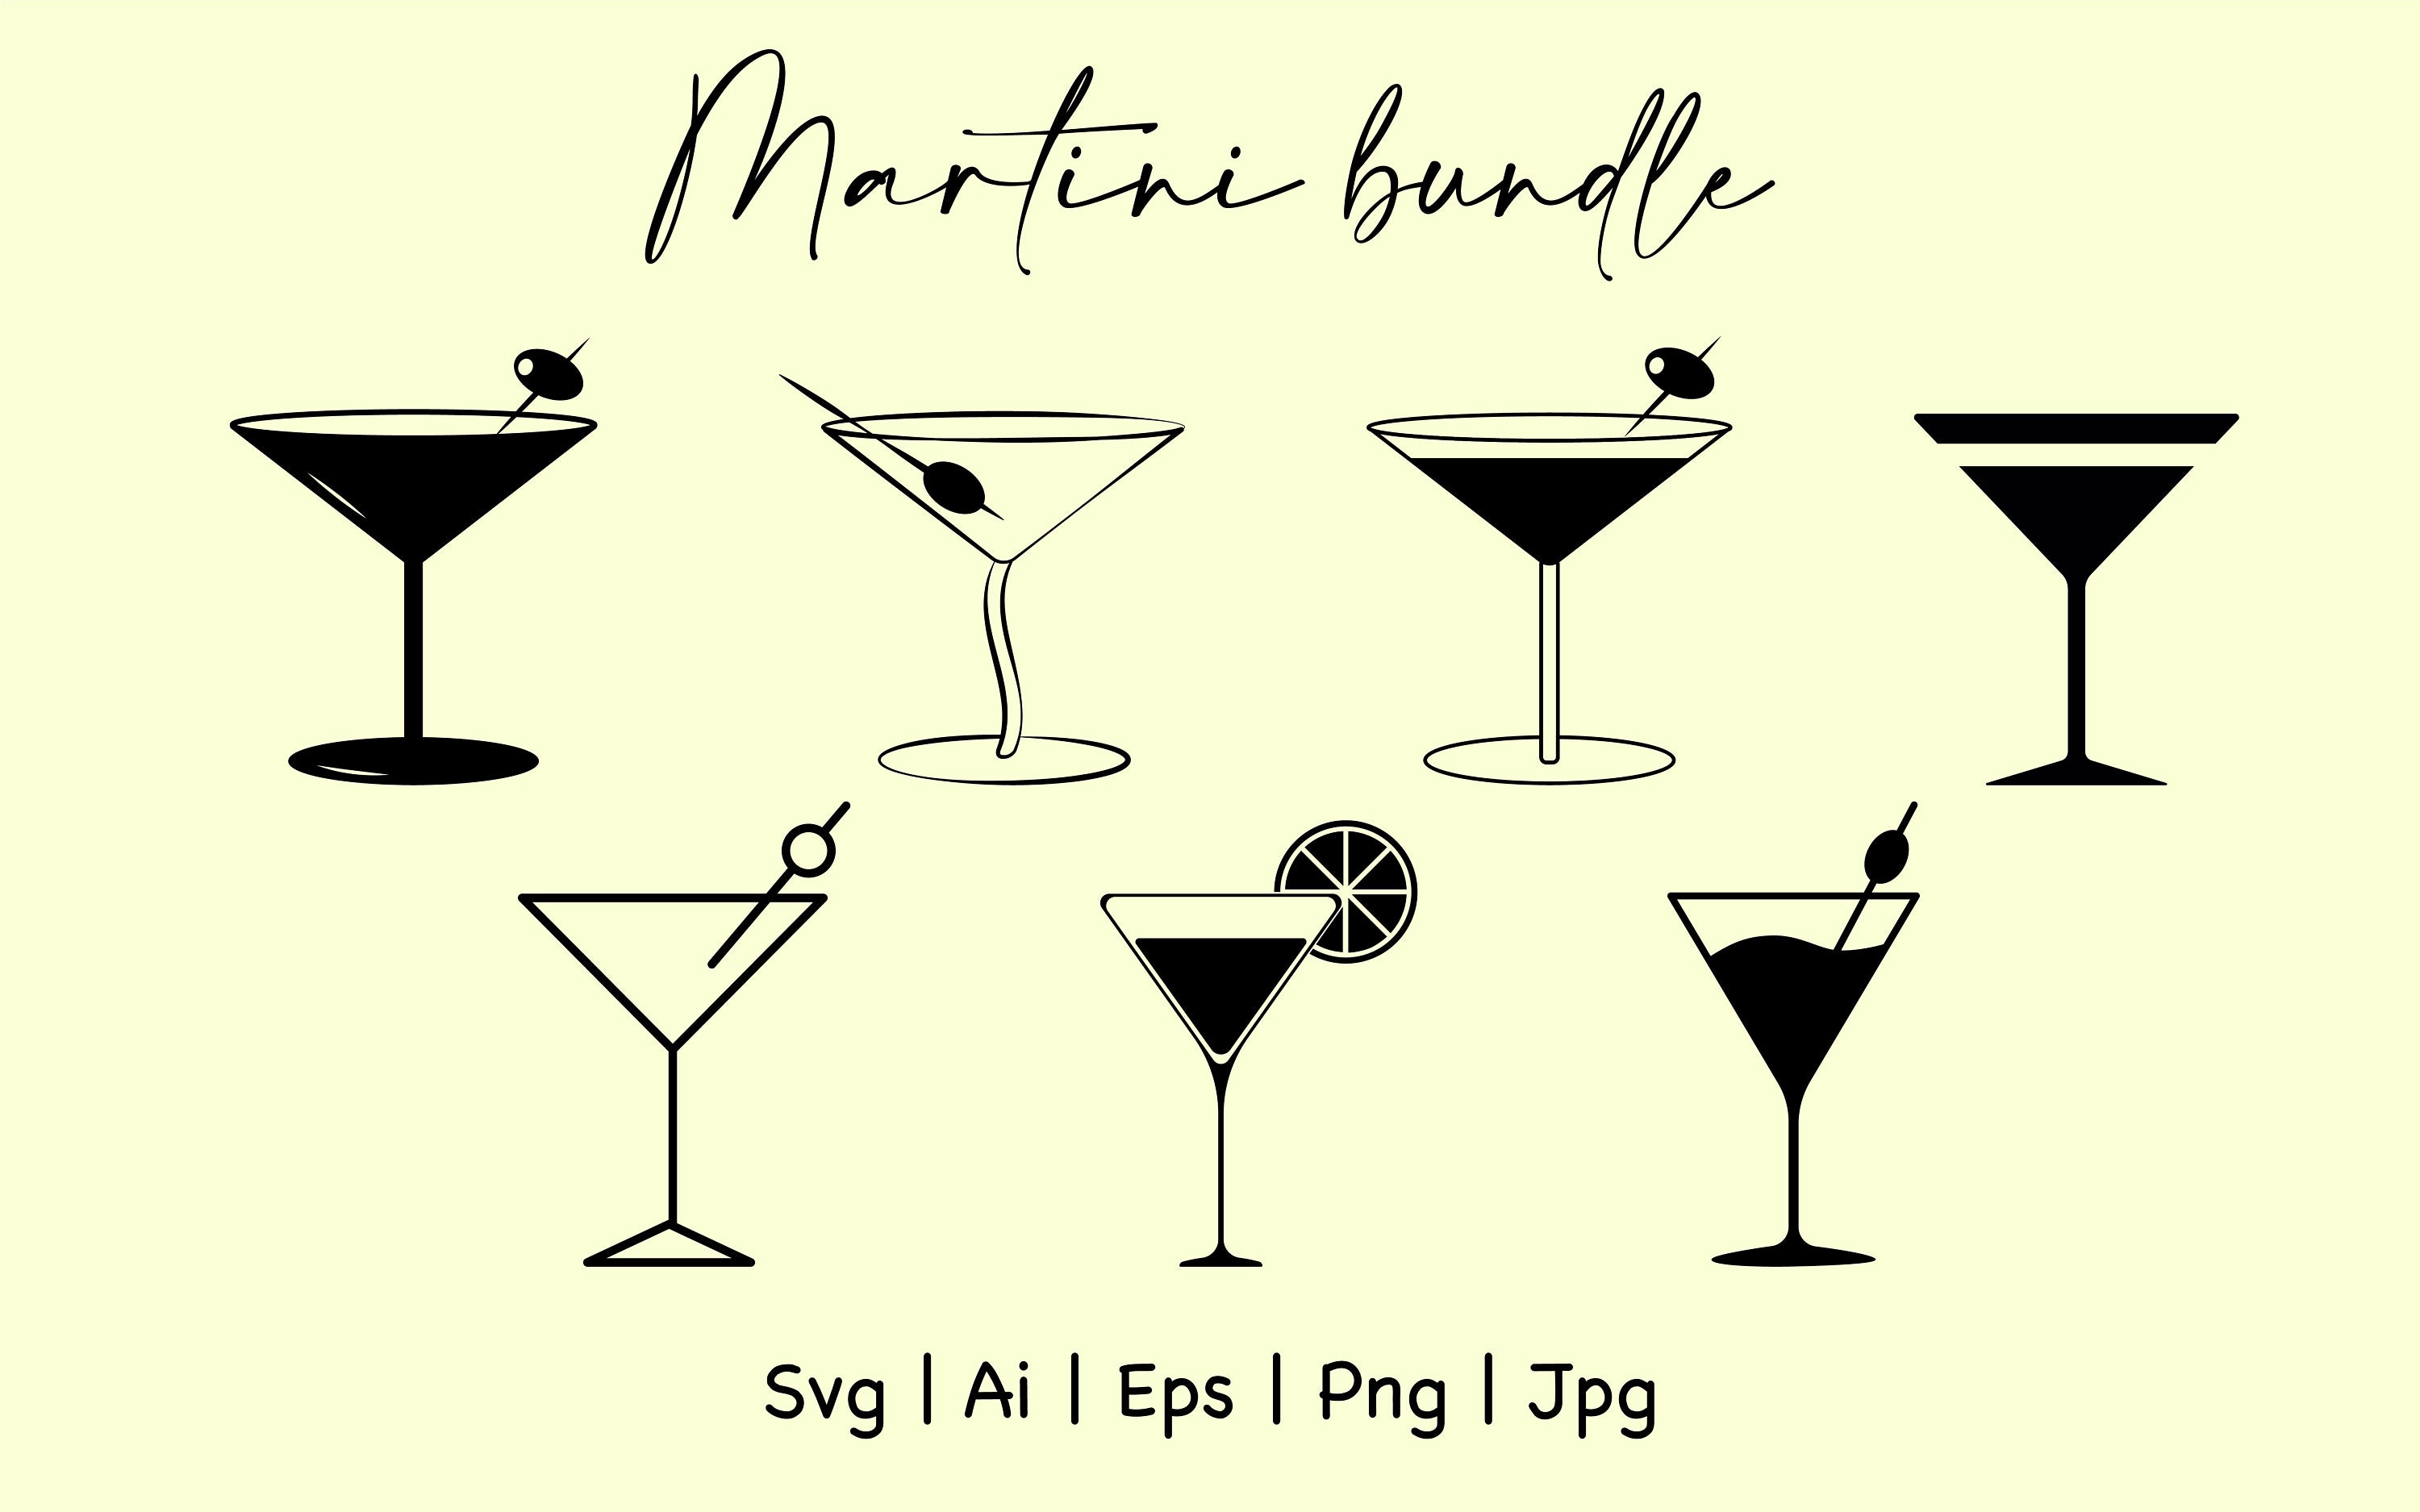 Cool Set of 3 Fun & Festive Pattern Martini Glasses